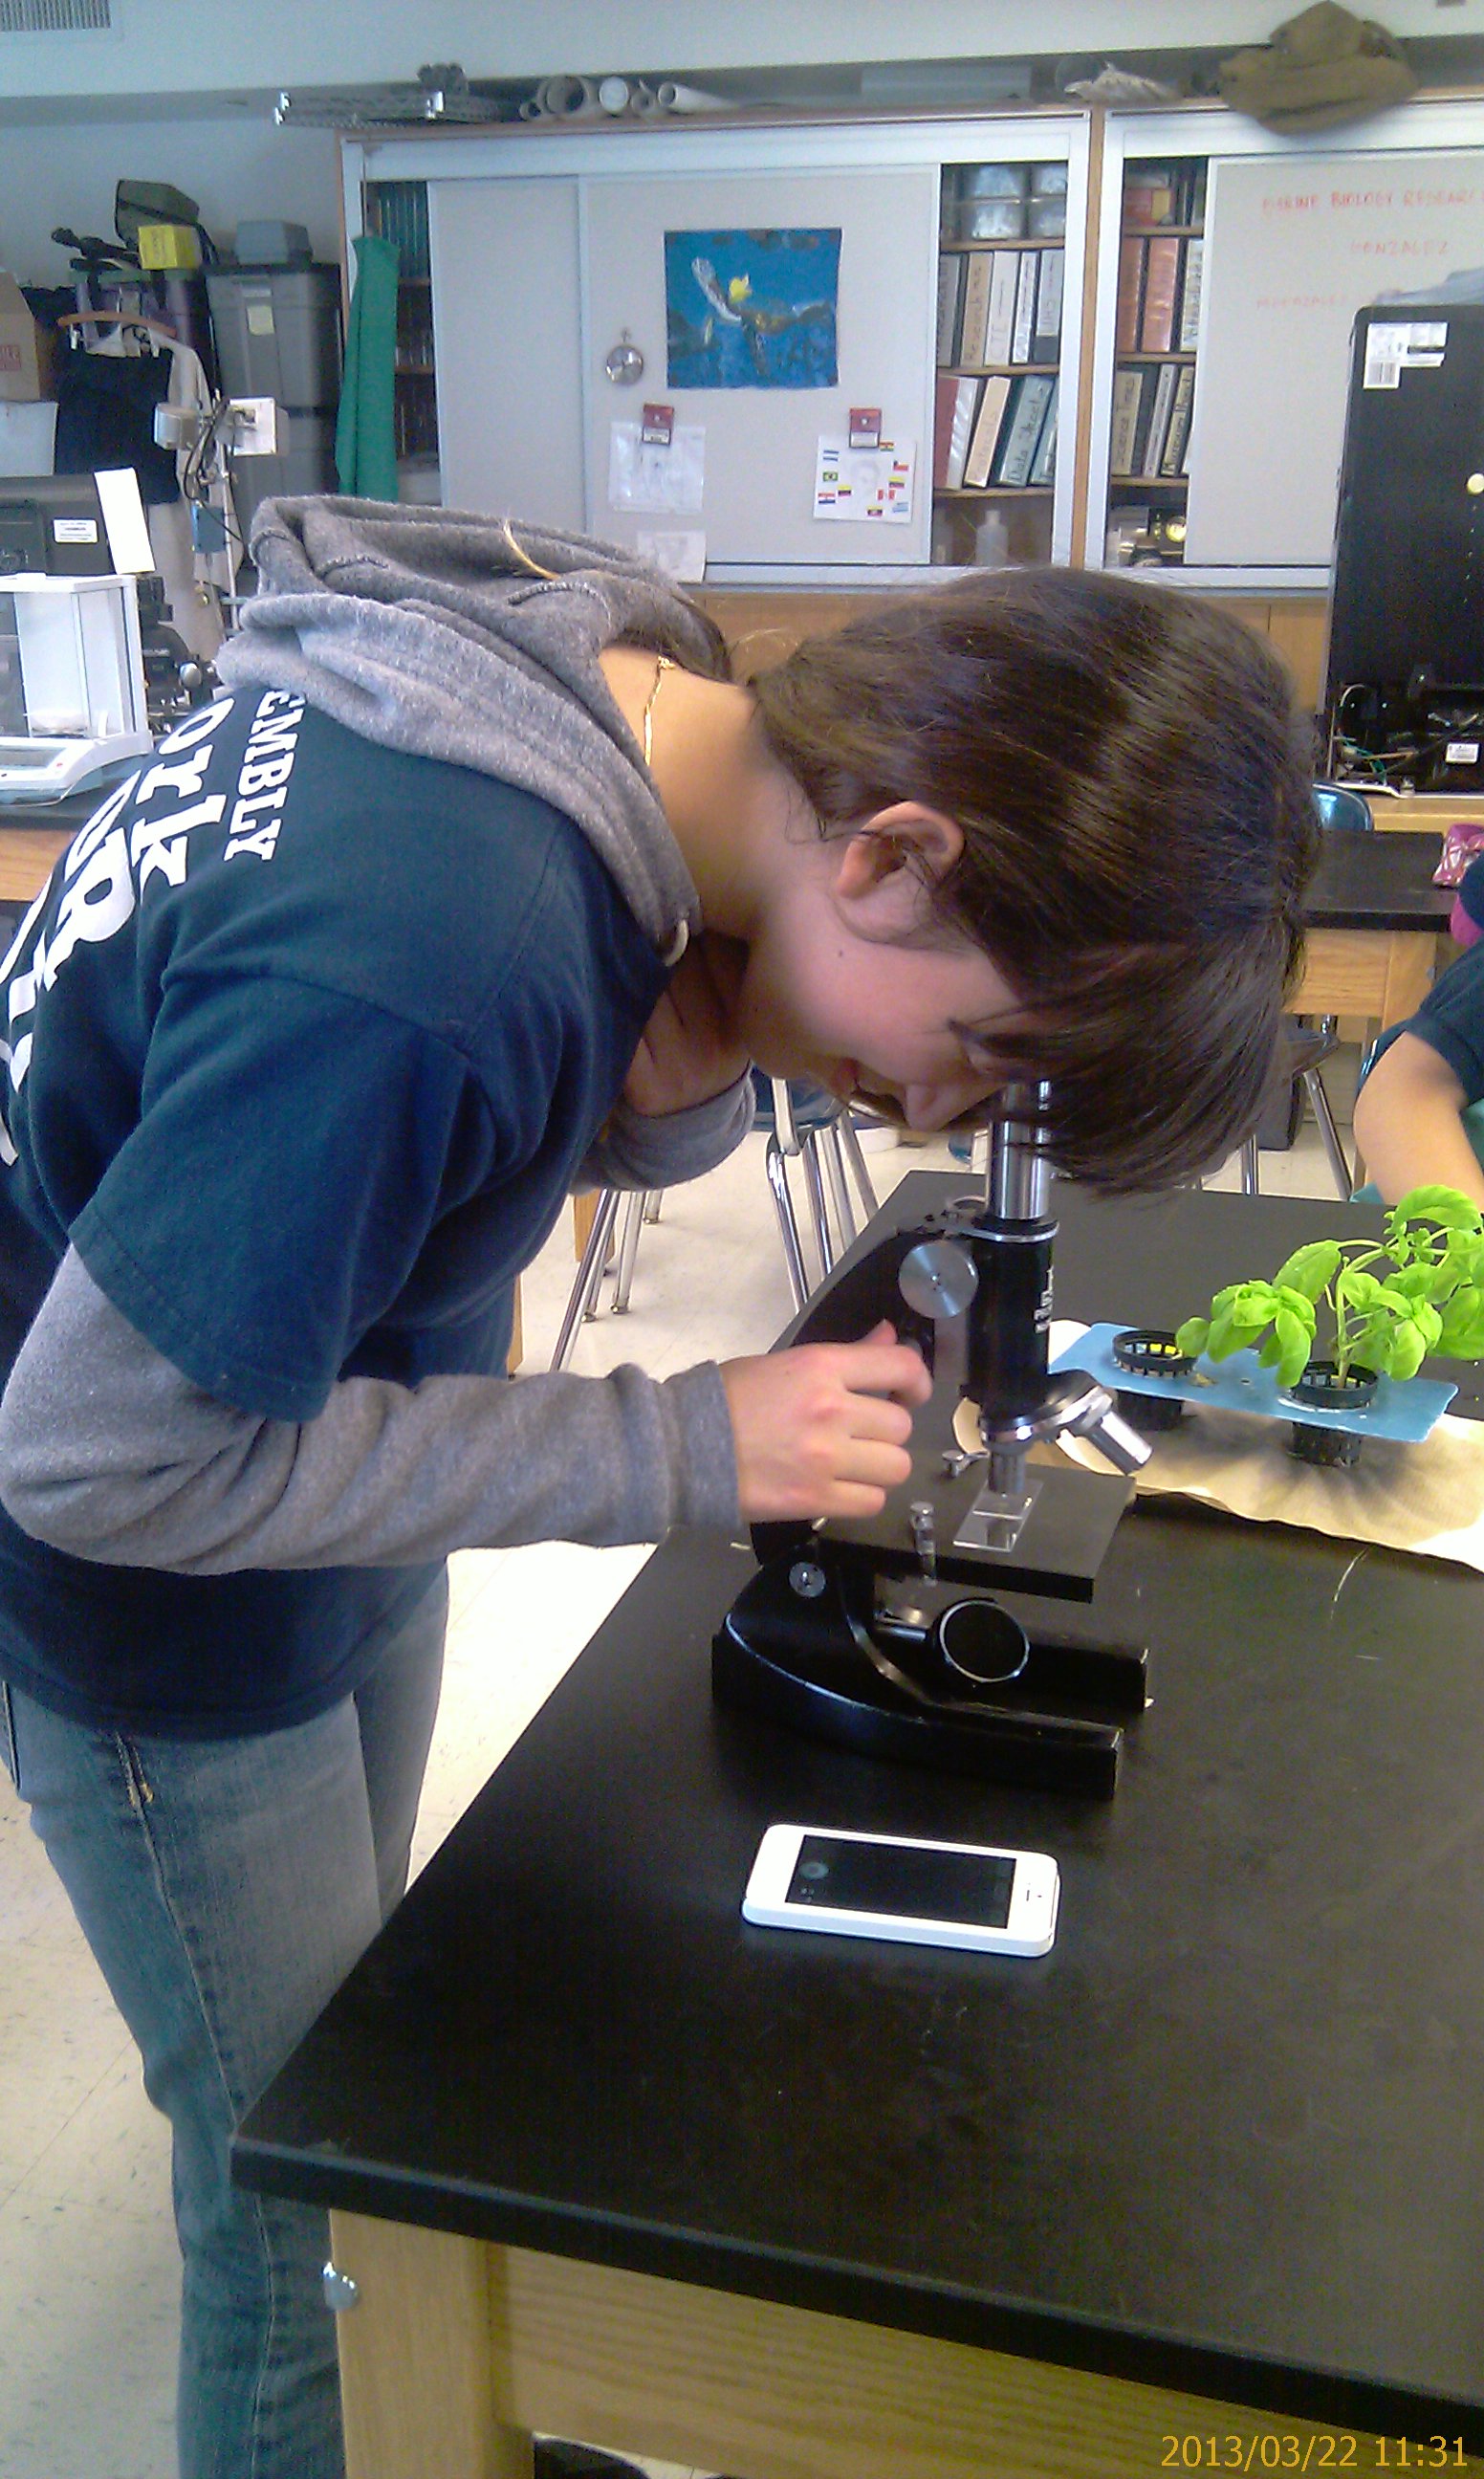 Skill: Microscopy for identifying the AEMs algae and protozoans.